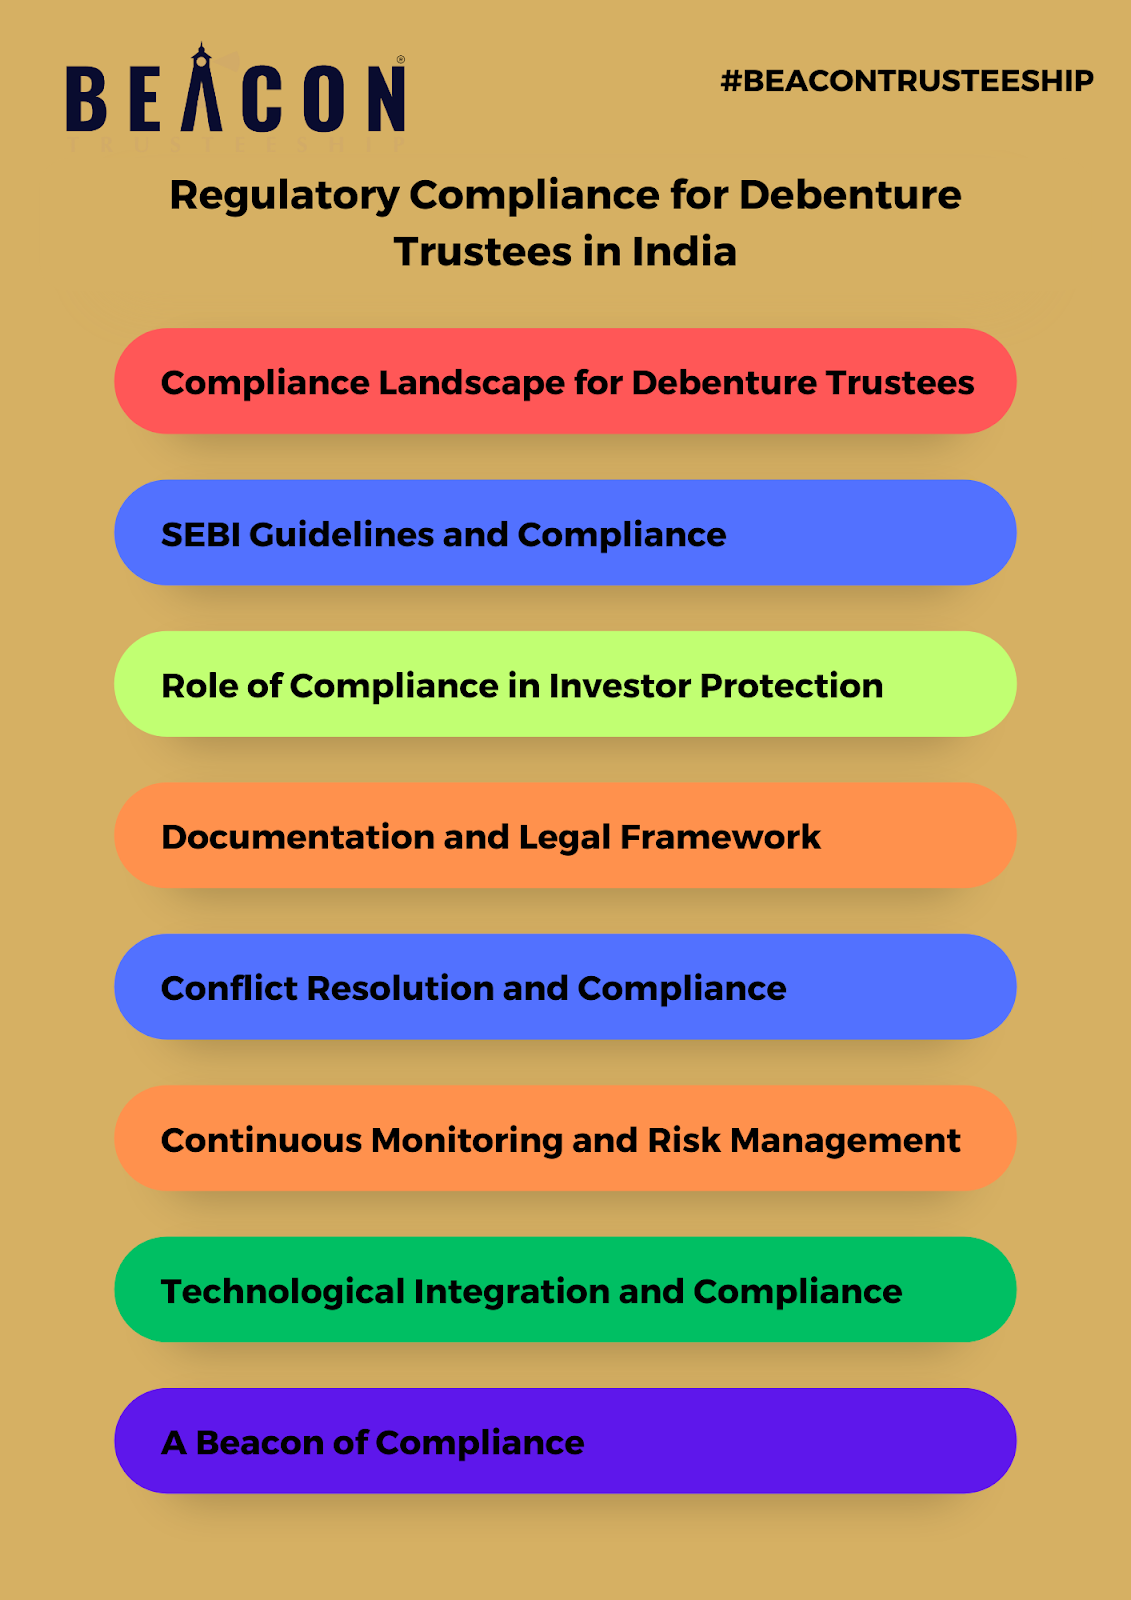 Key Responsibilities of Debenture Trustees in India